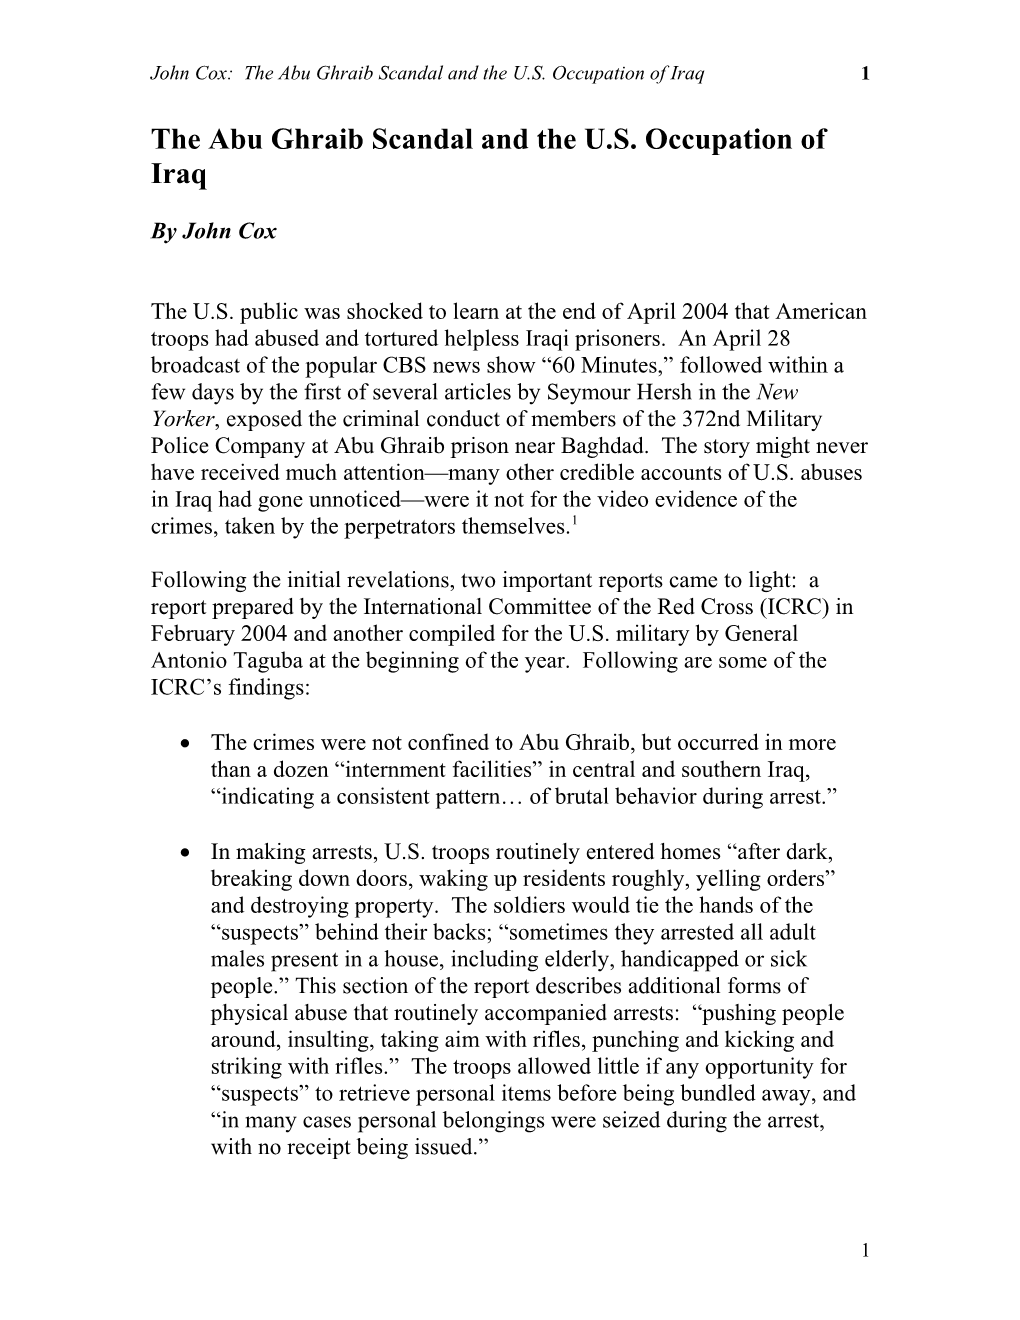 The Abu Ghraib Scandal and the U.S. Occupation of Iraq